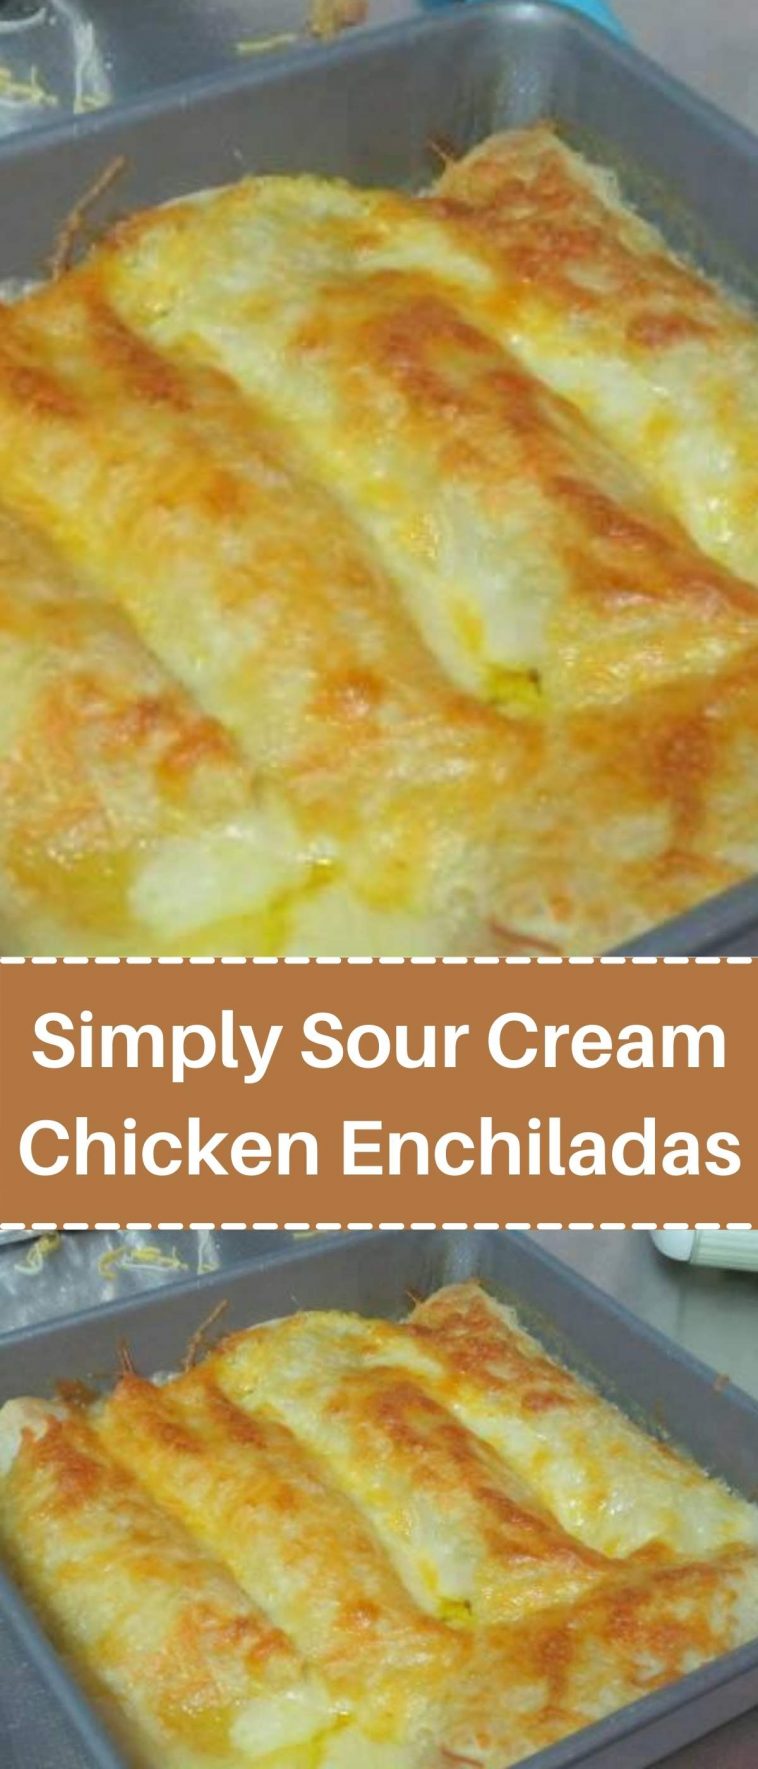 Simply Sour Cream Chicken Enchiladas